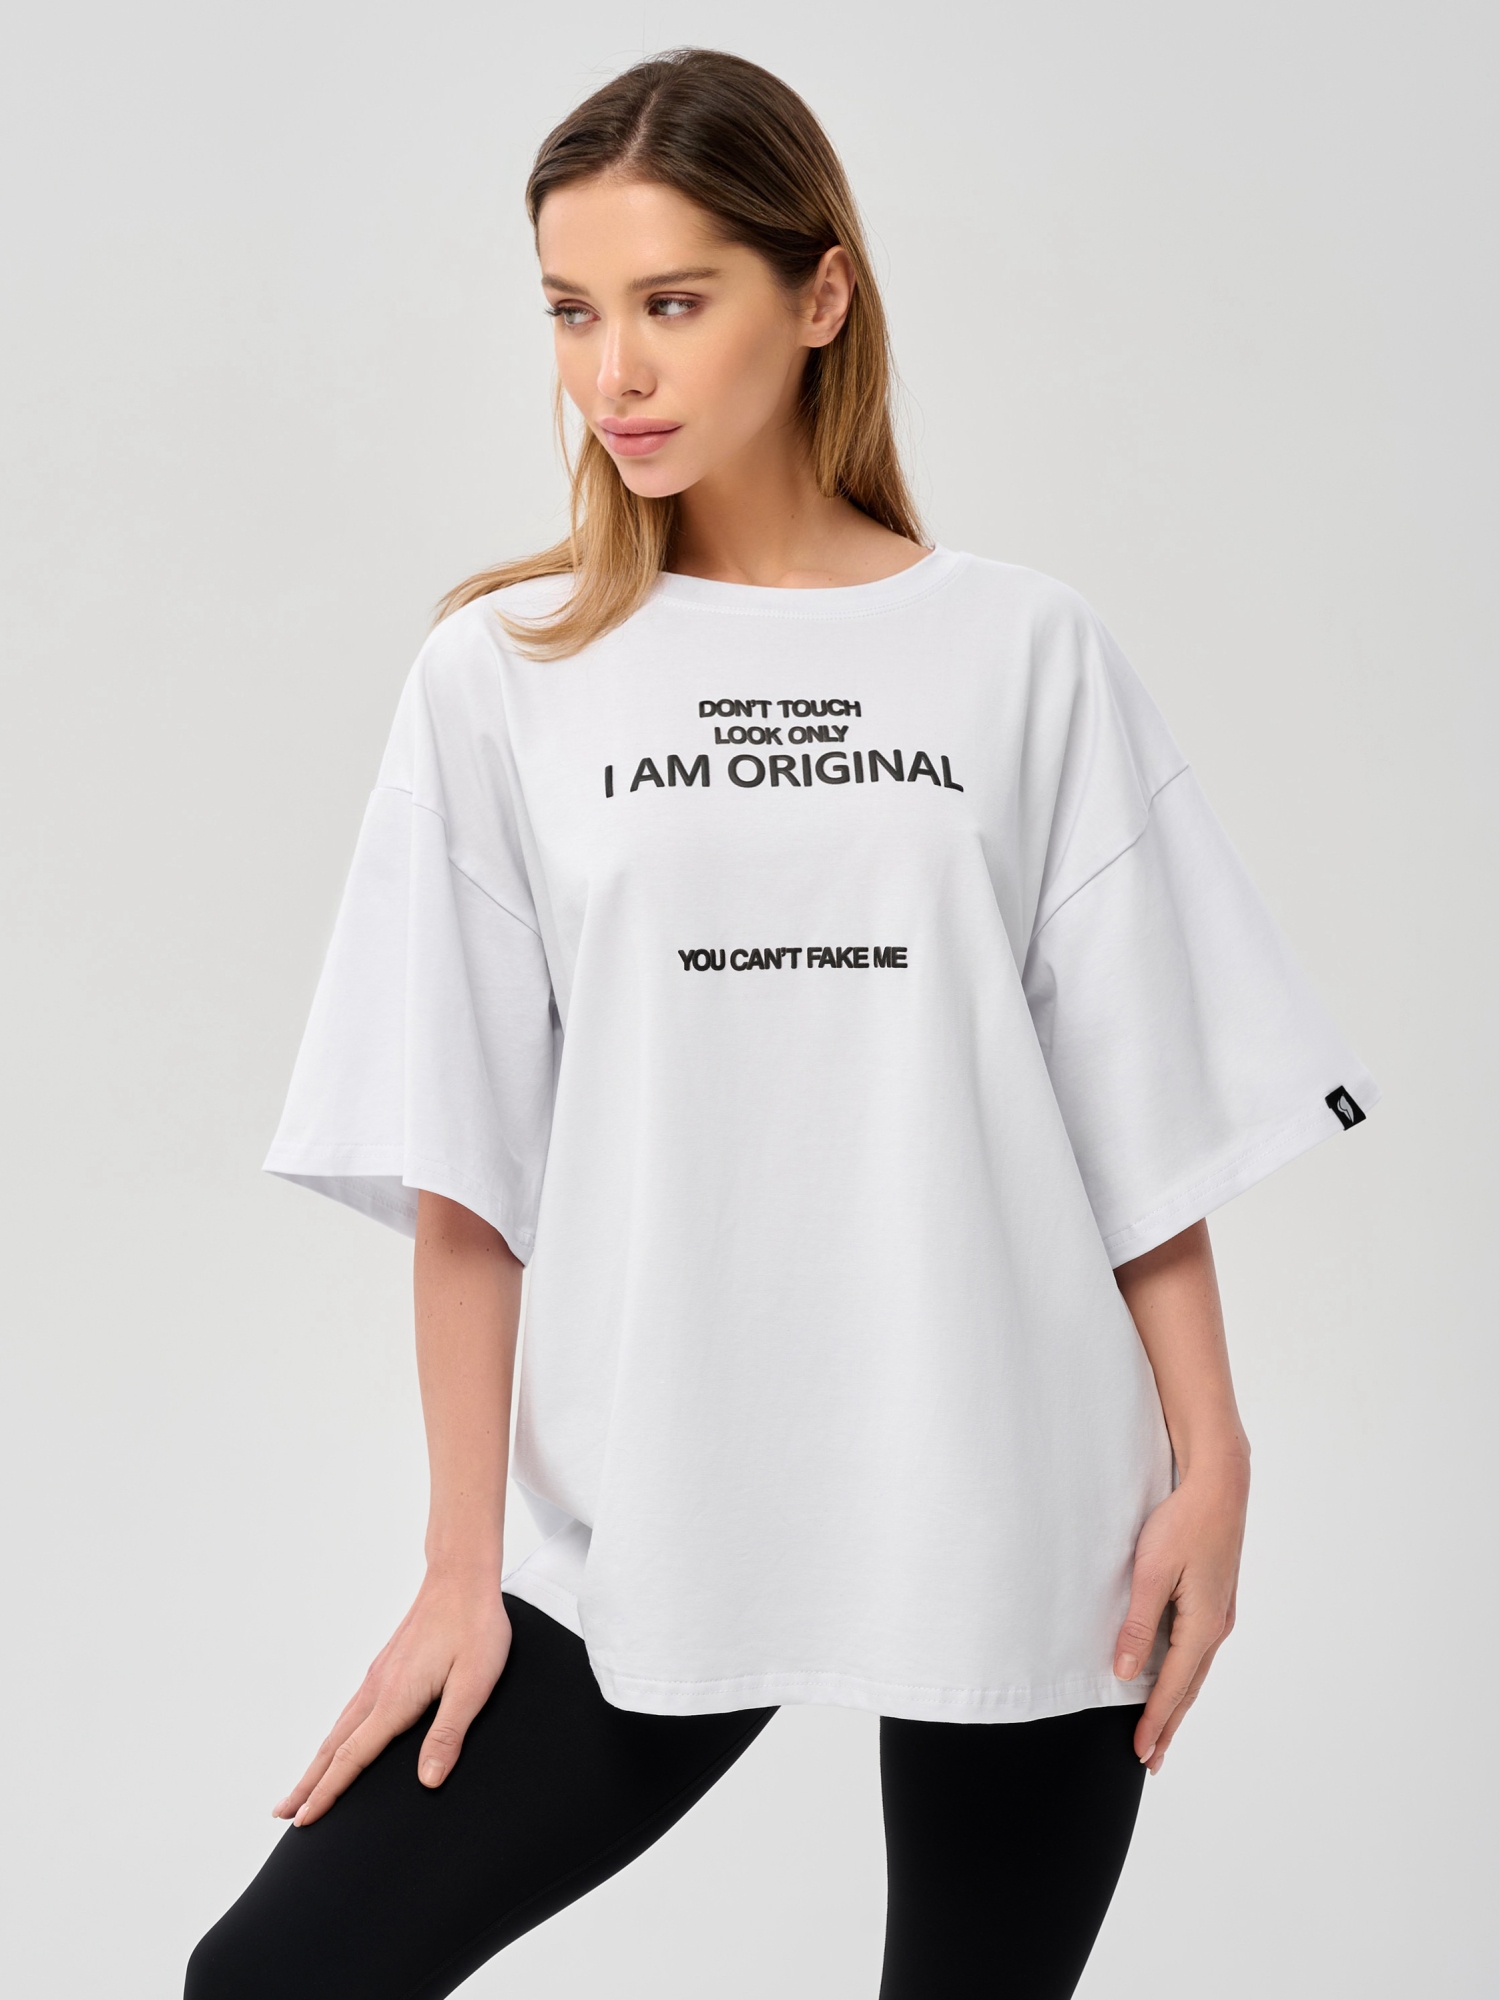 Bona Fashion: OVERSIZE T-shirt "Original" фото 9